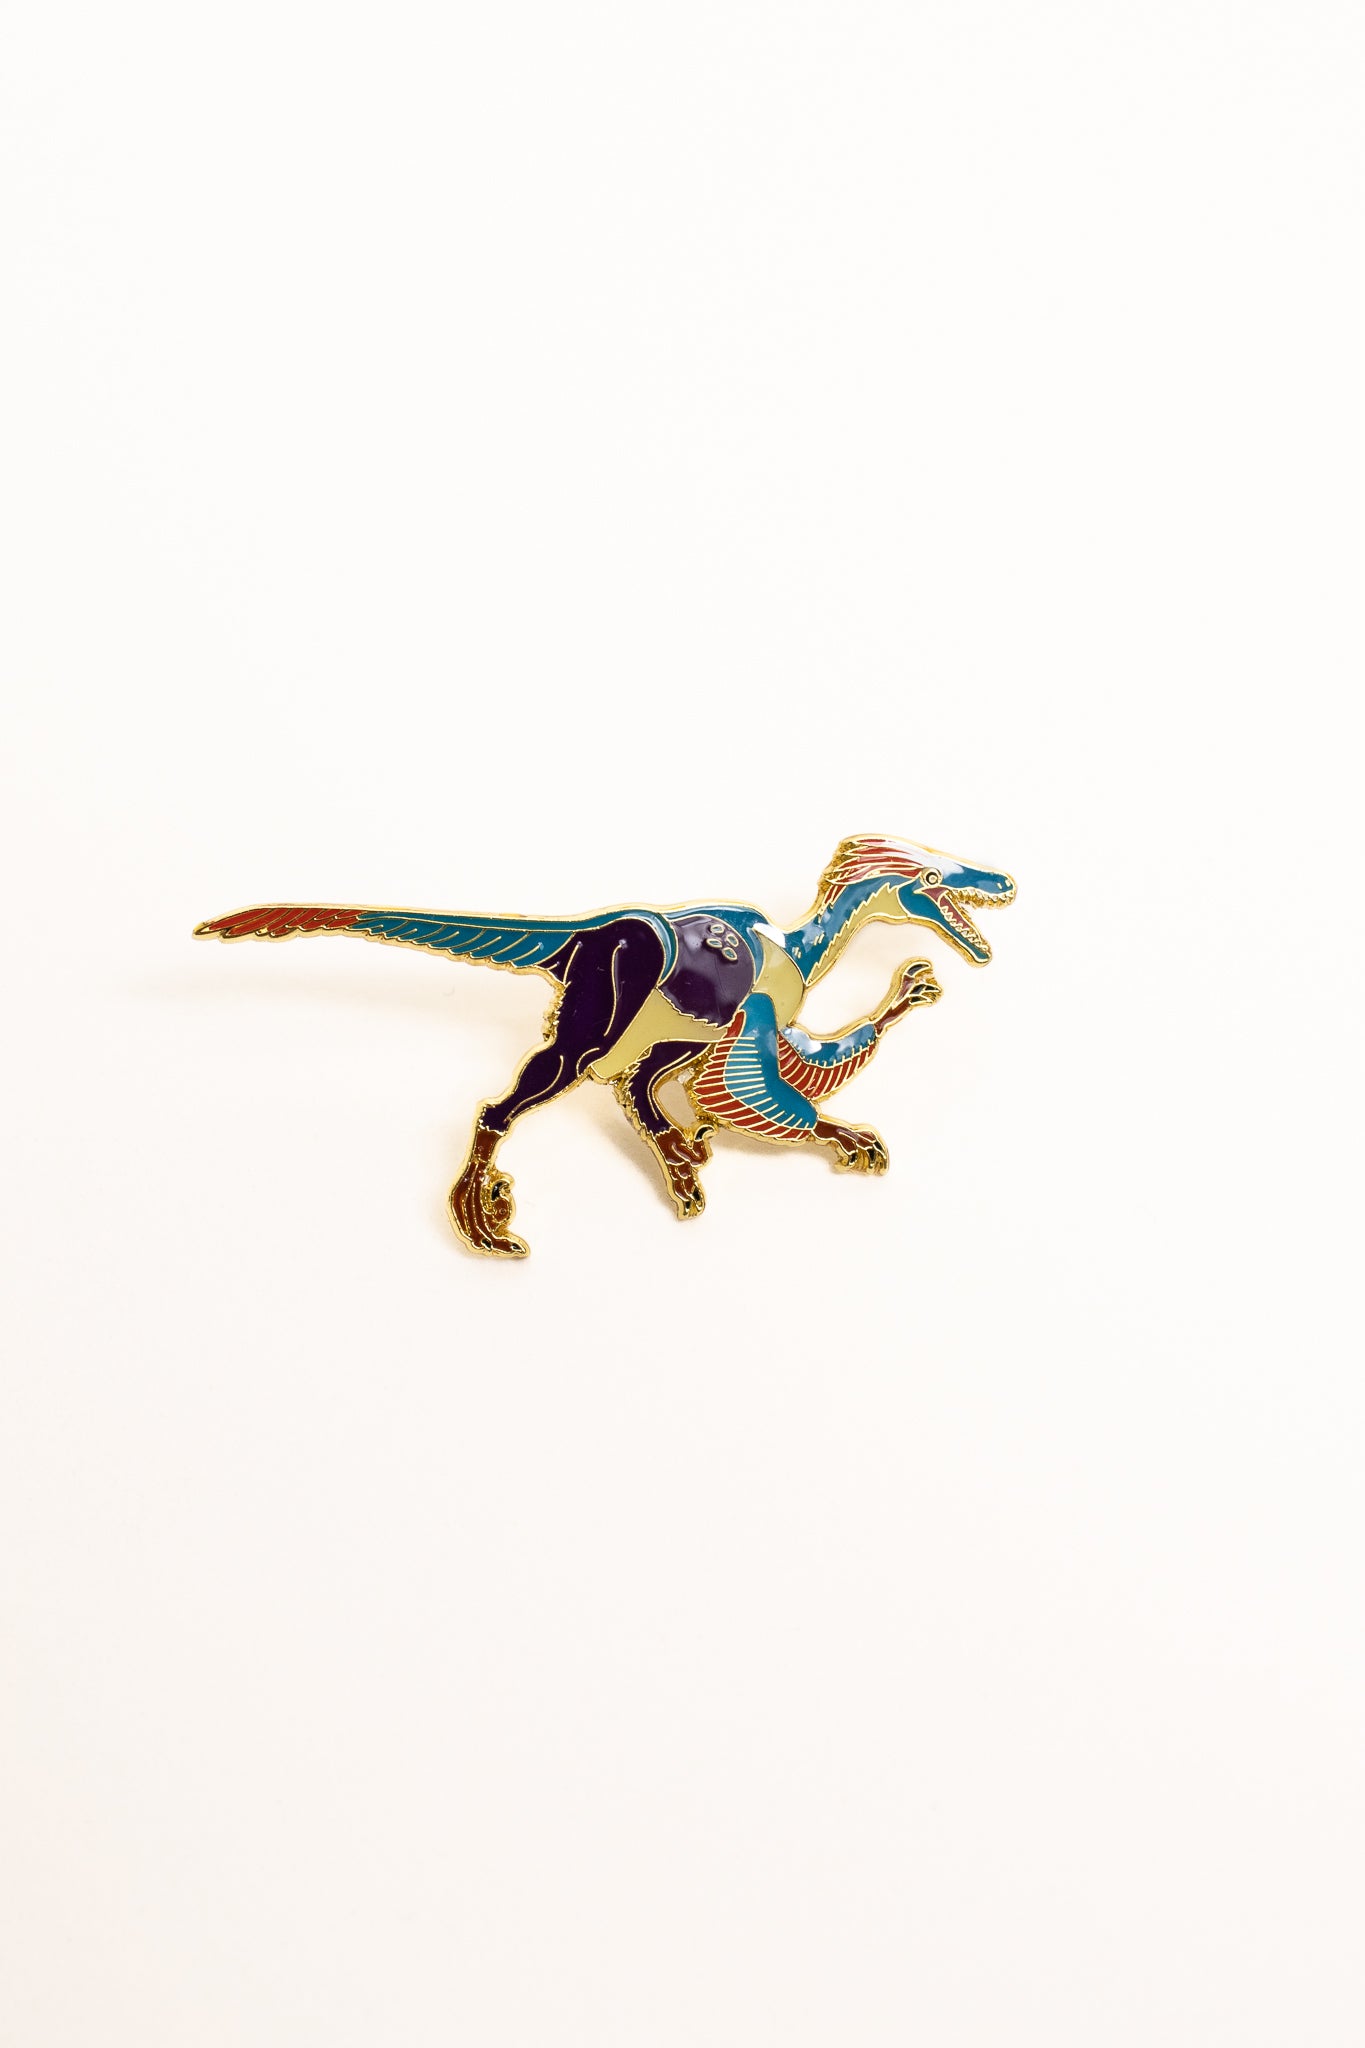 Velociraptor Pin - Stemcell Science Shop